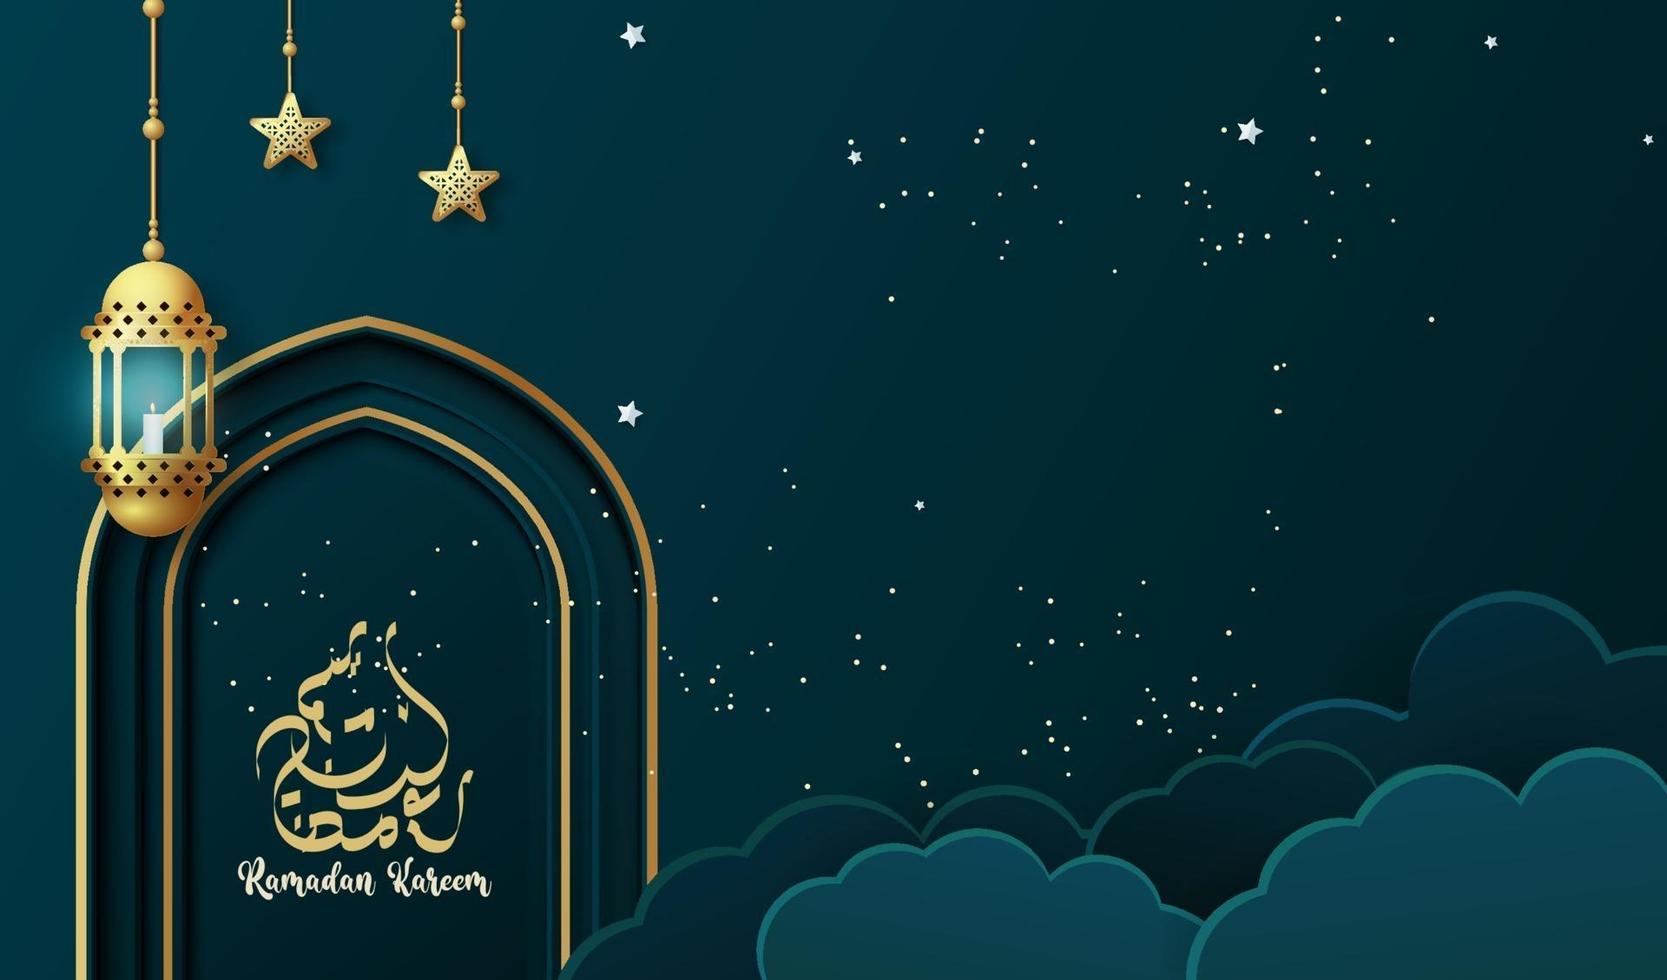 Ramadan kareem background with lantern. Ramadan greeting card or banner template design vector